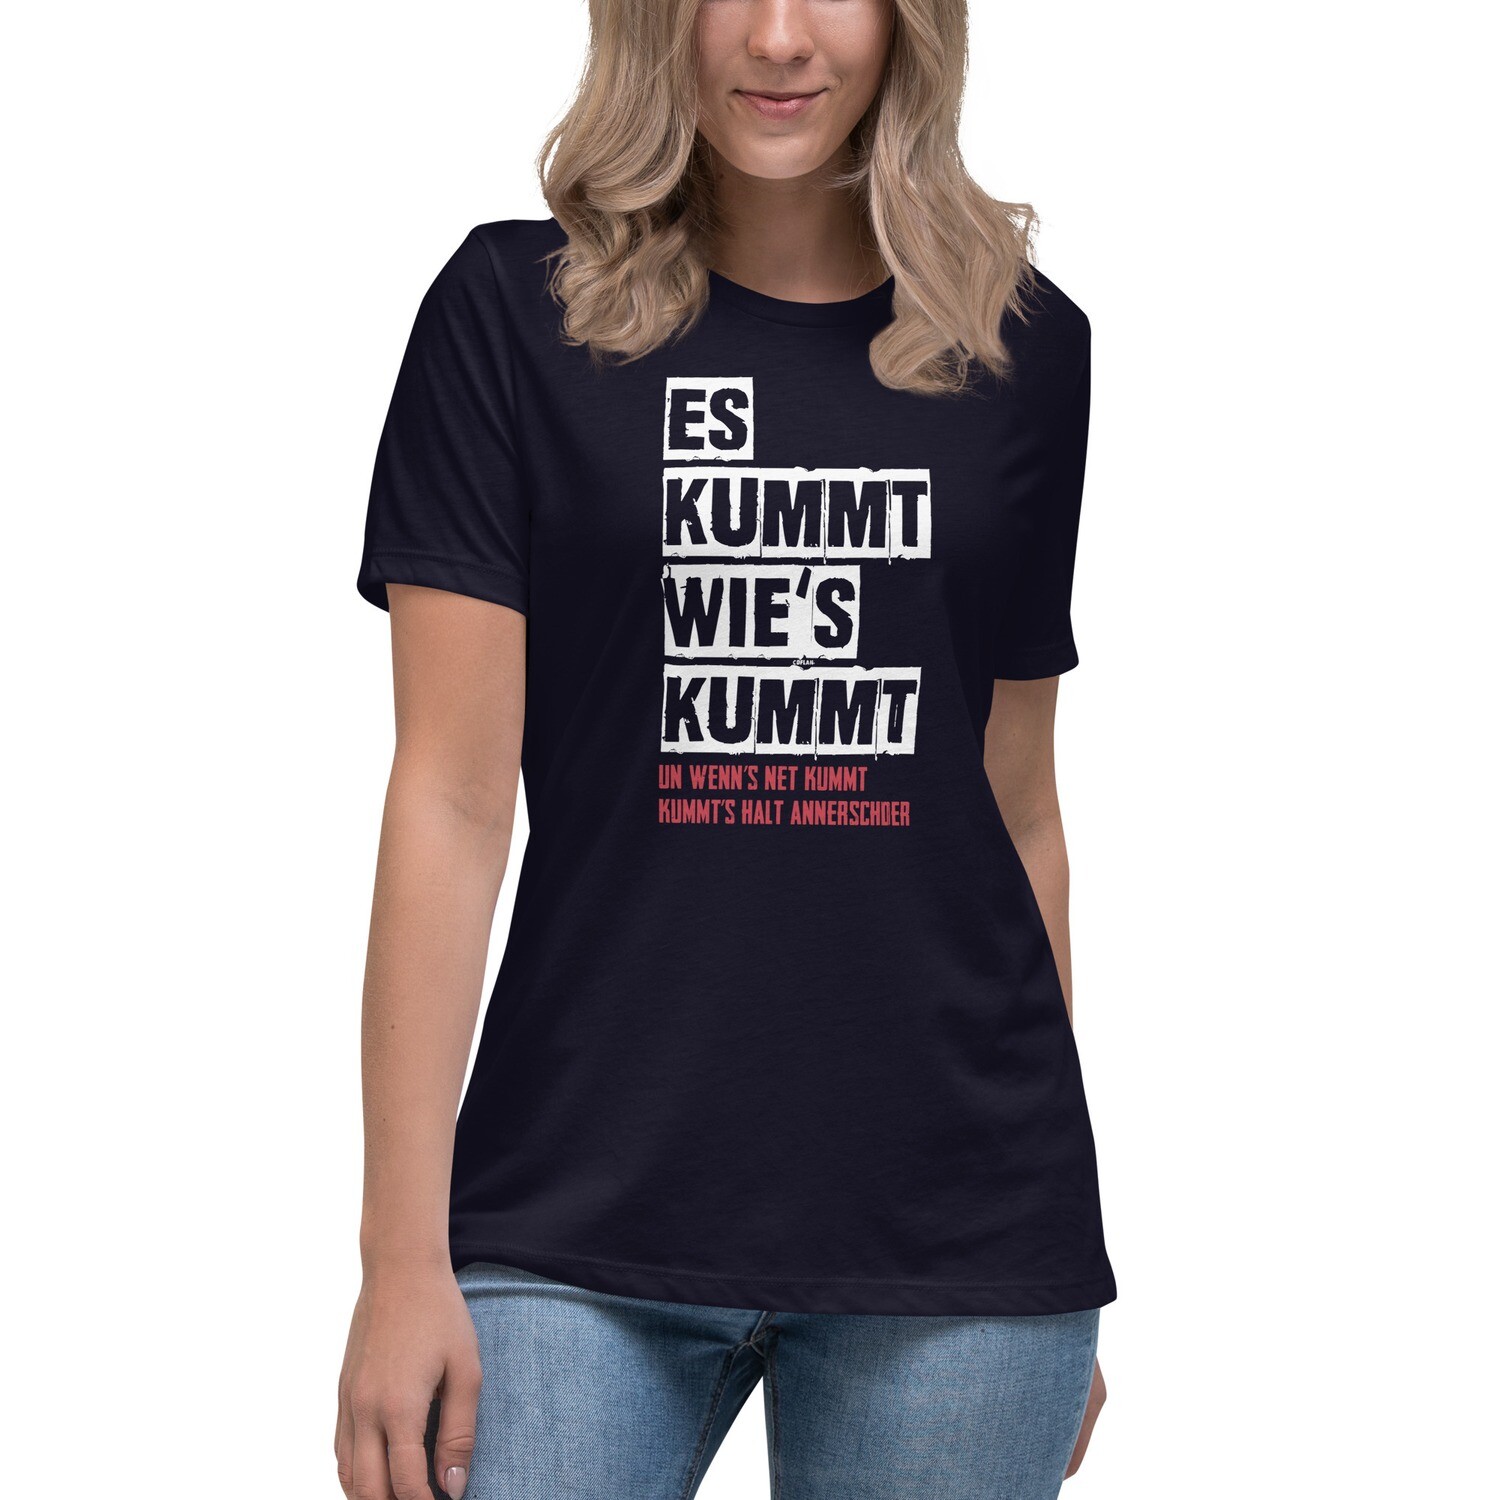 Frauen T-Shirt "Es kummt wie´s kummt"